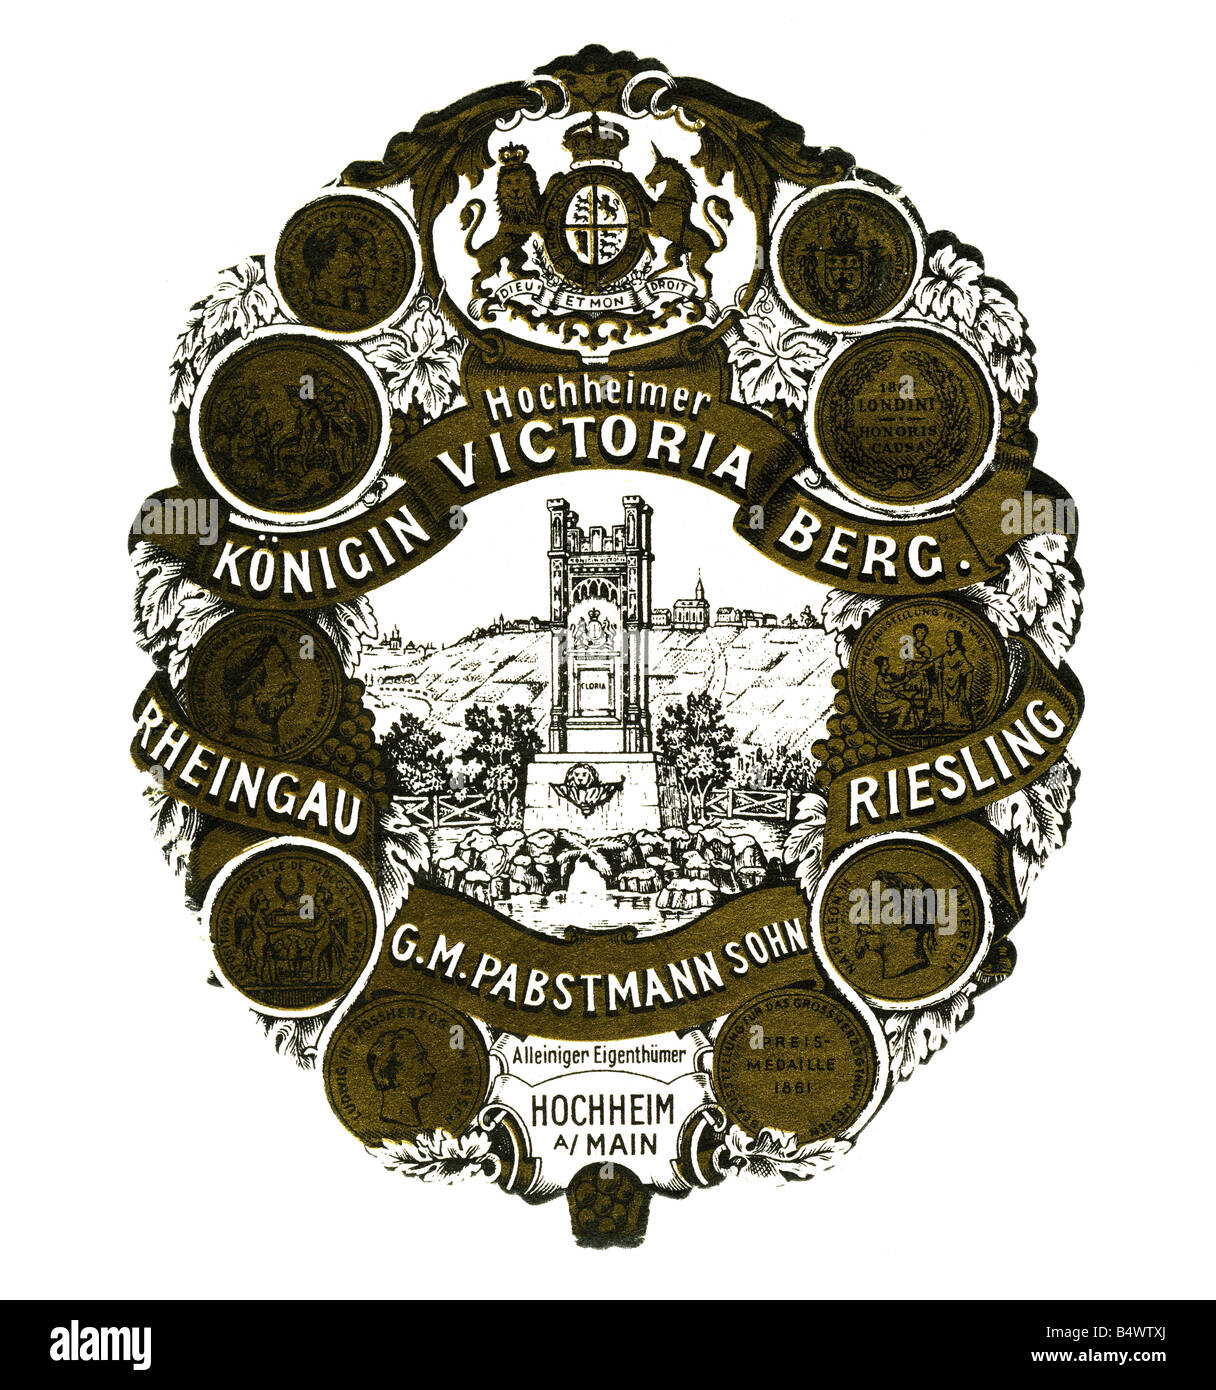 Alcool, vin, étiquettes, 'Hochheimer Koenigin Victoria Berg', Winery Georg Michael Papstmann, Hochheim am Main, vers 1880, , Banque D'Images